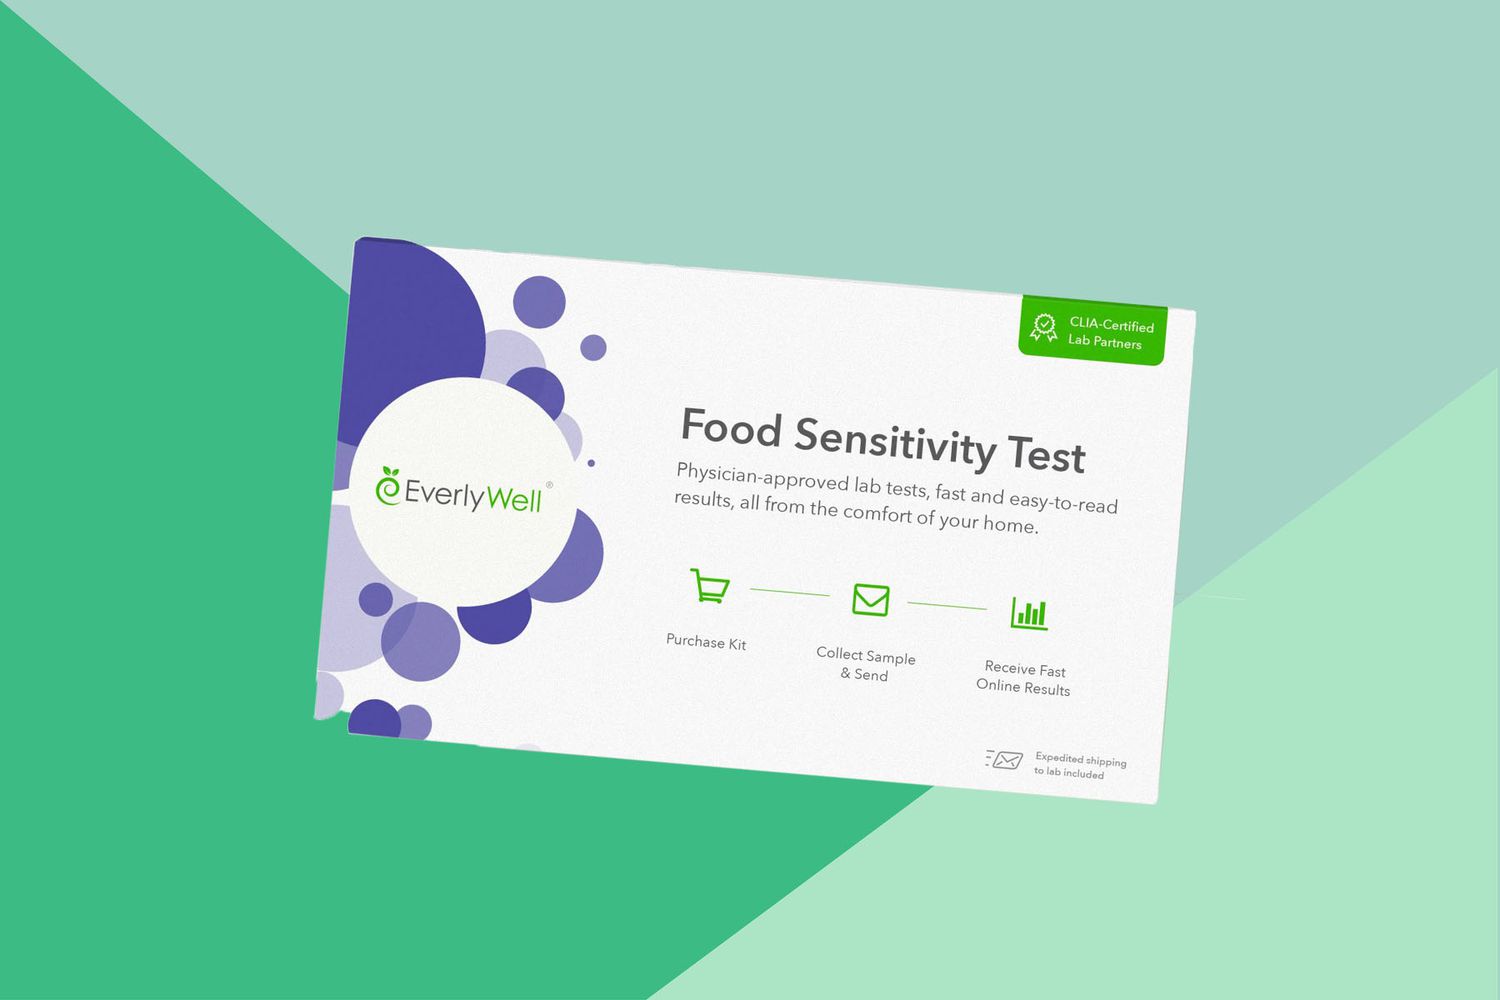 everlywell reviews food sensitivity